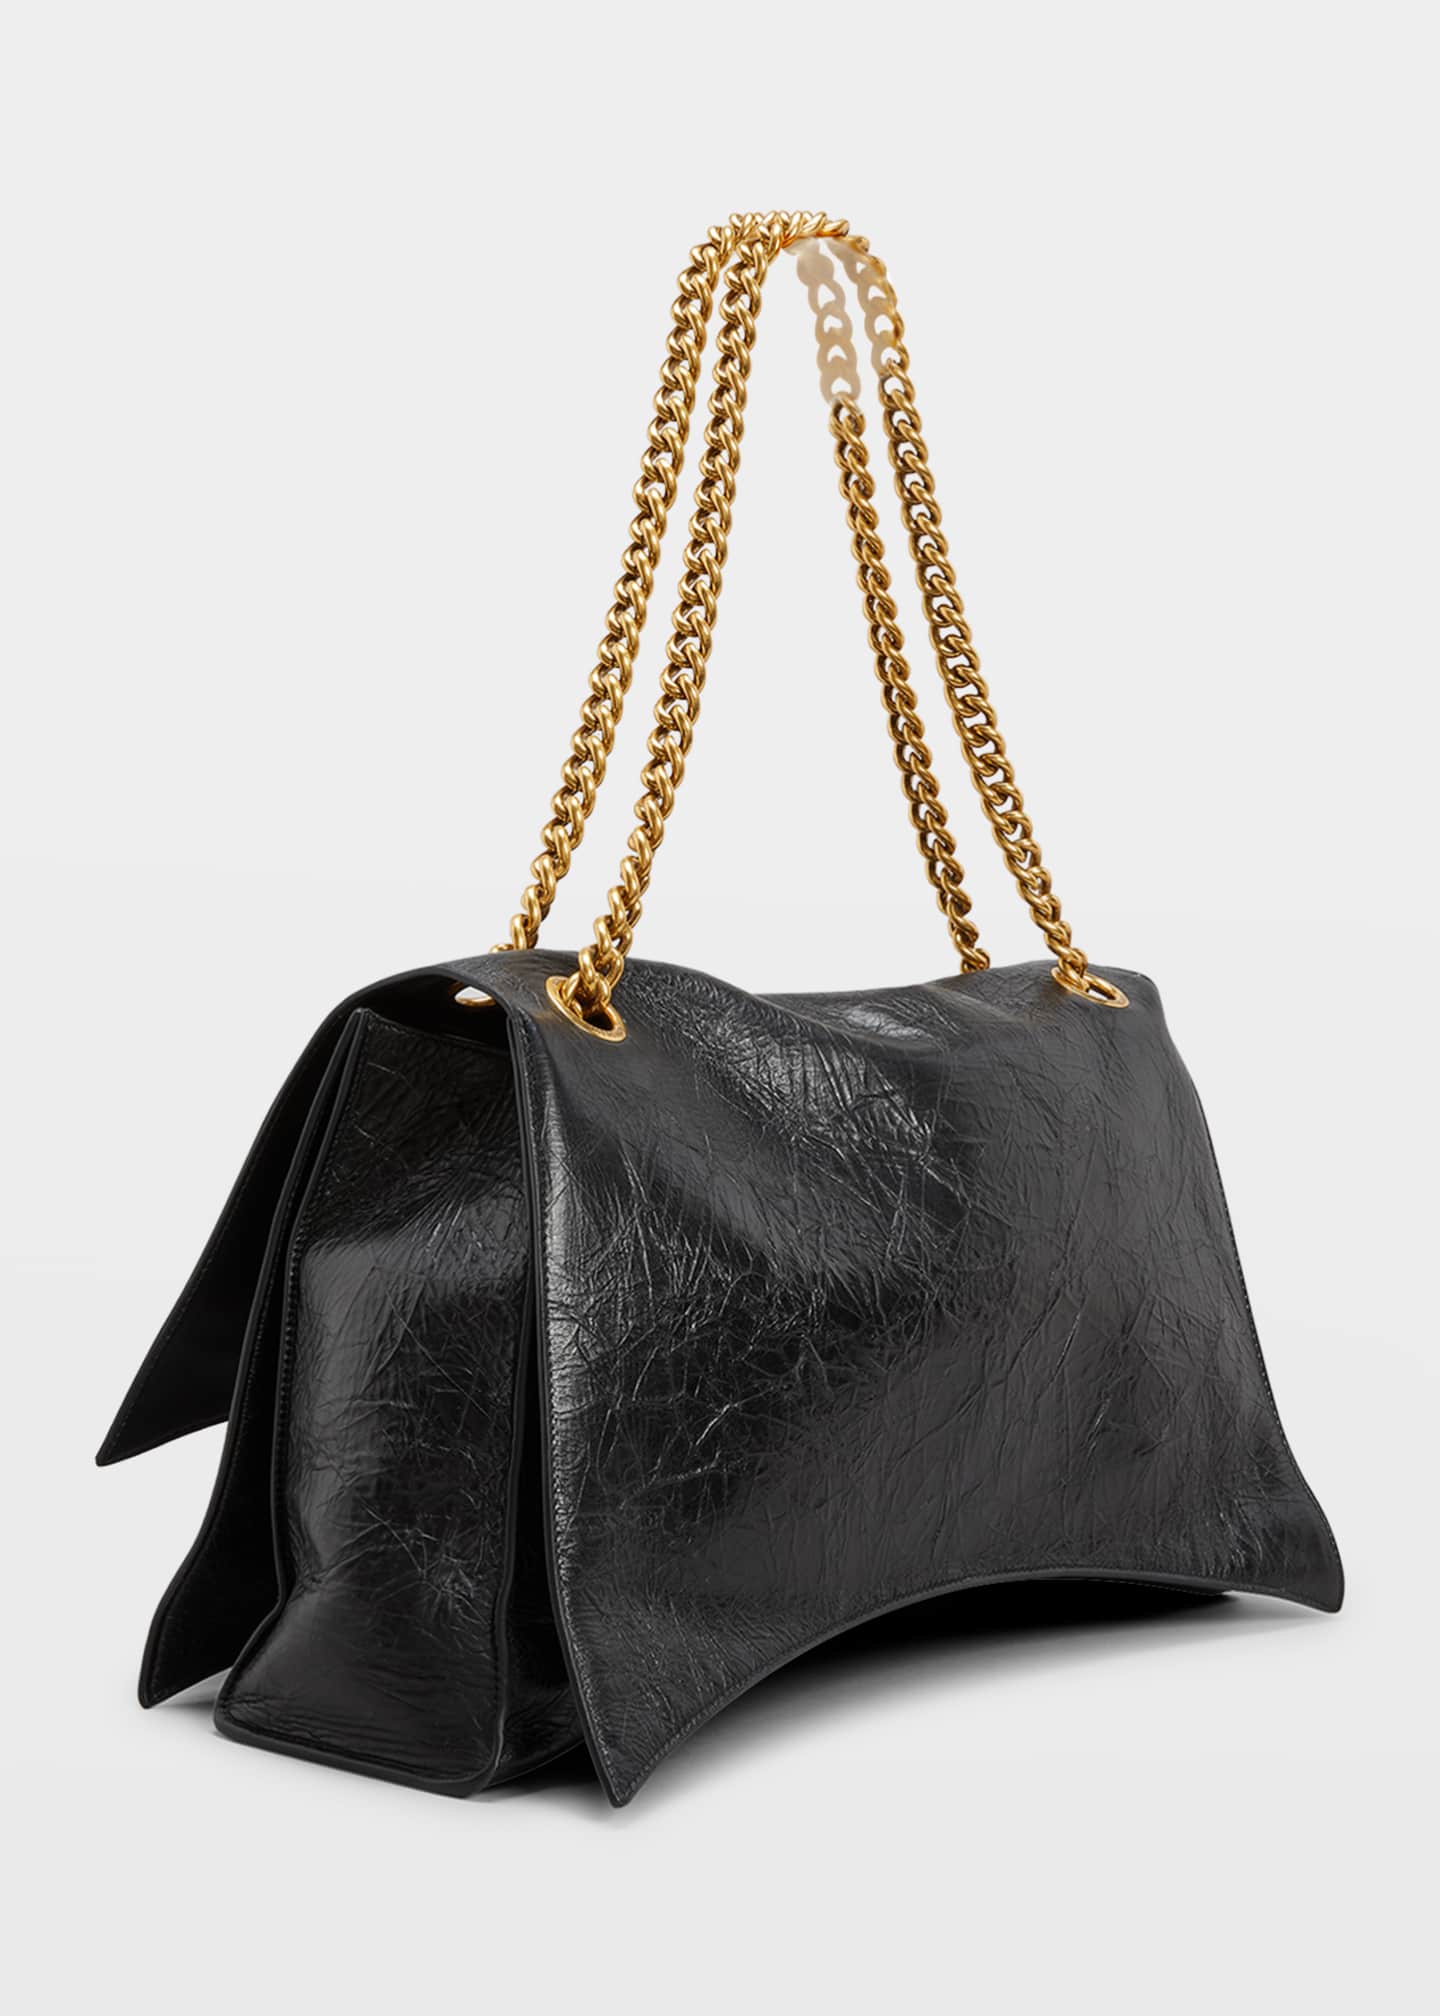 Balenciaga Glove Large Leather Tote Bag In Black